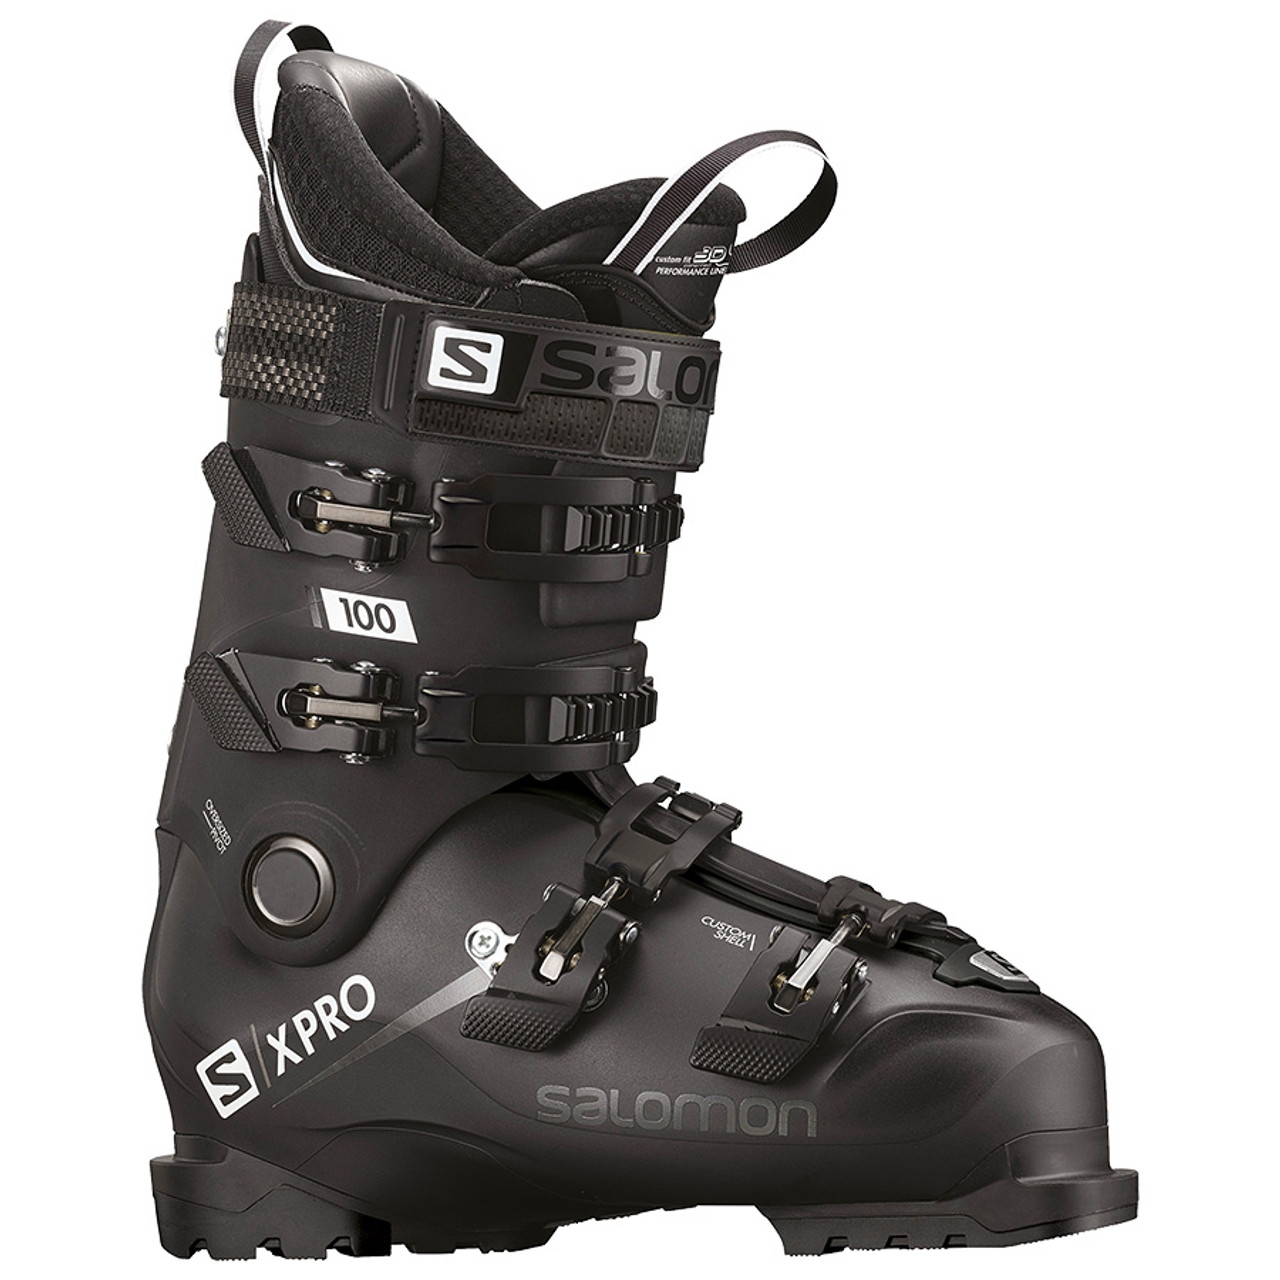 Salomon X Pro 100 Ski Boots 2019 - Getboards Ride Shop